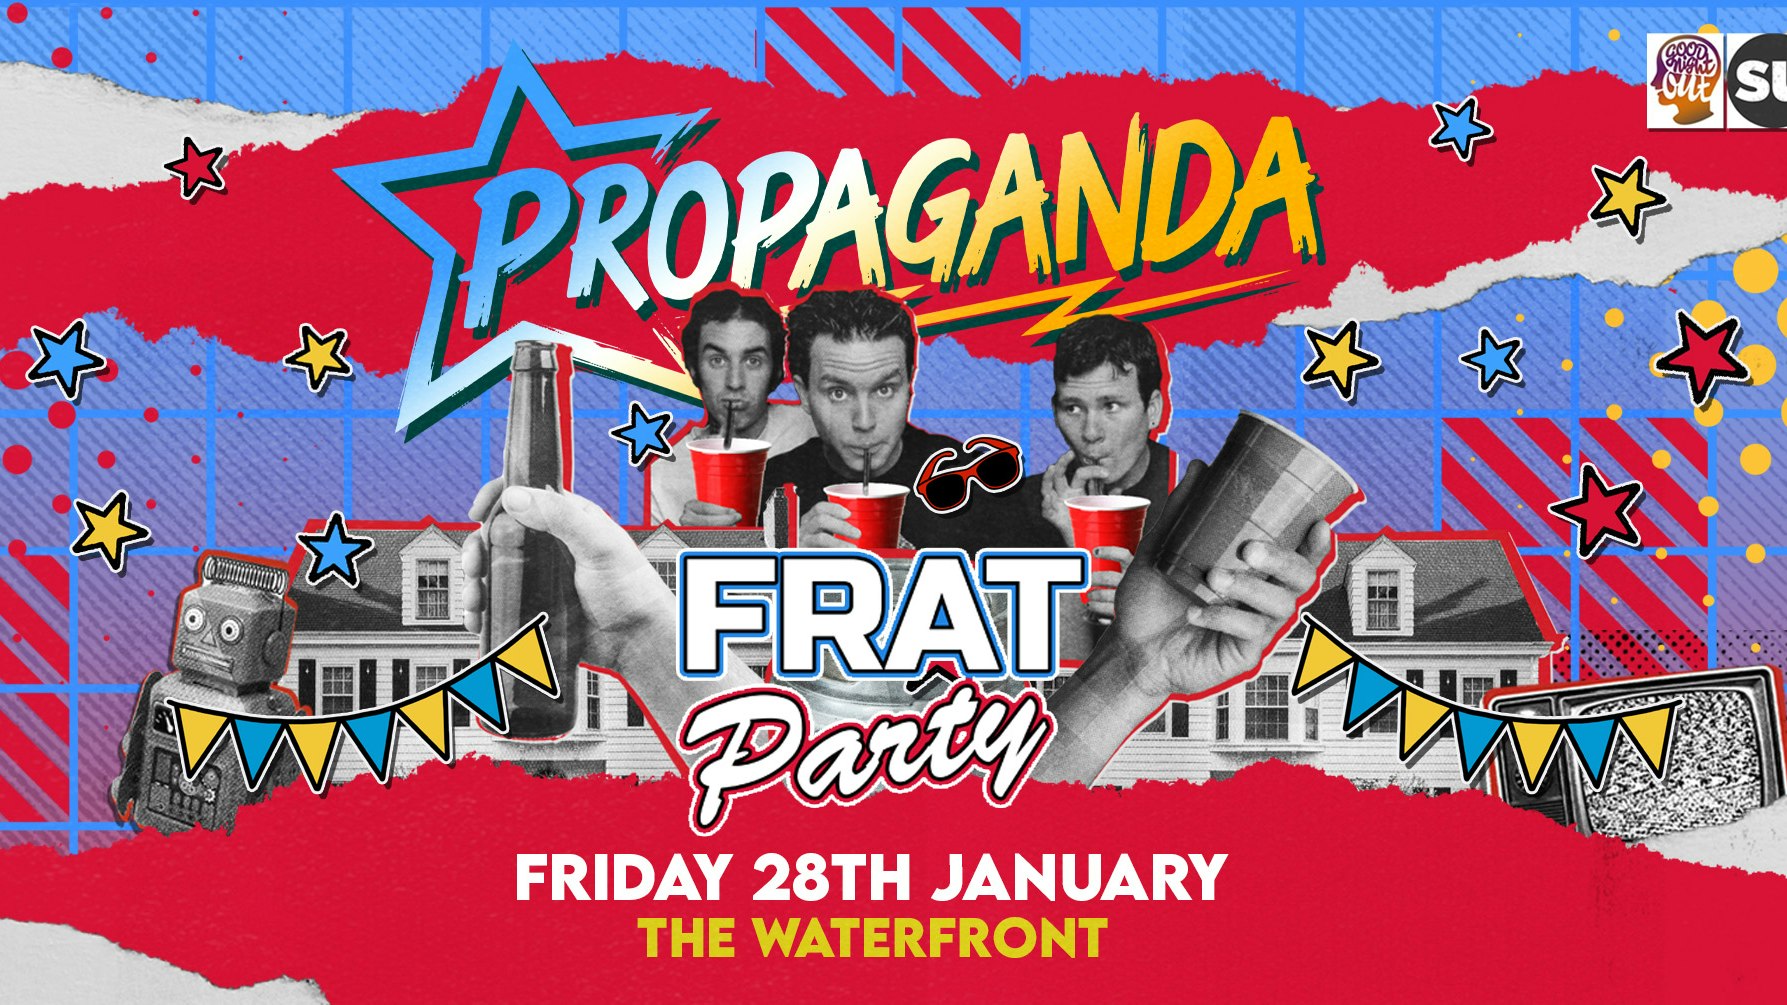 Propaganda Norwich – Frat Party!